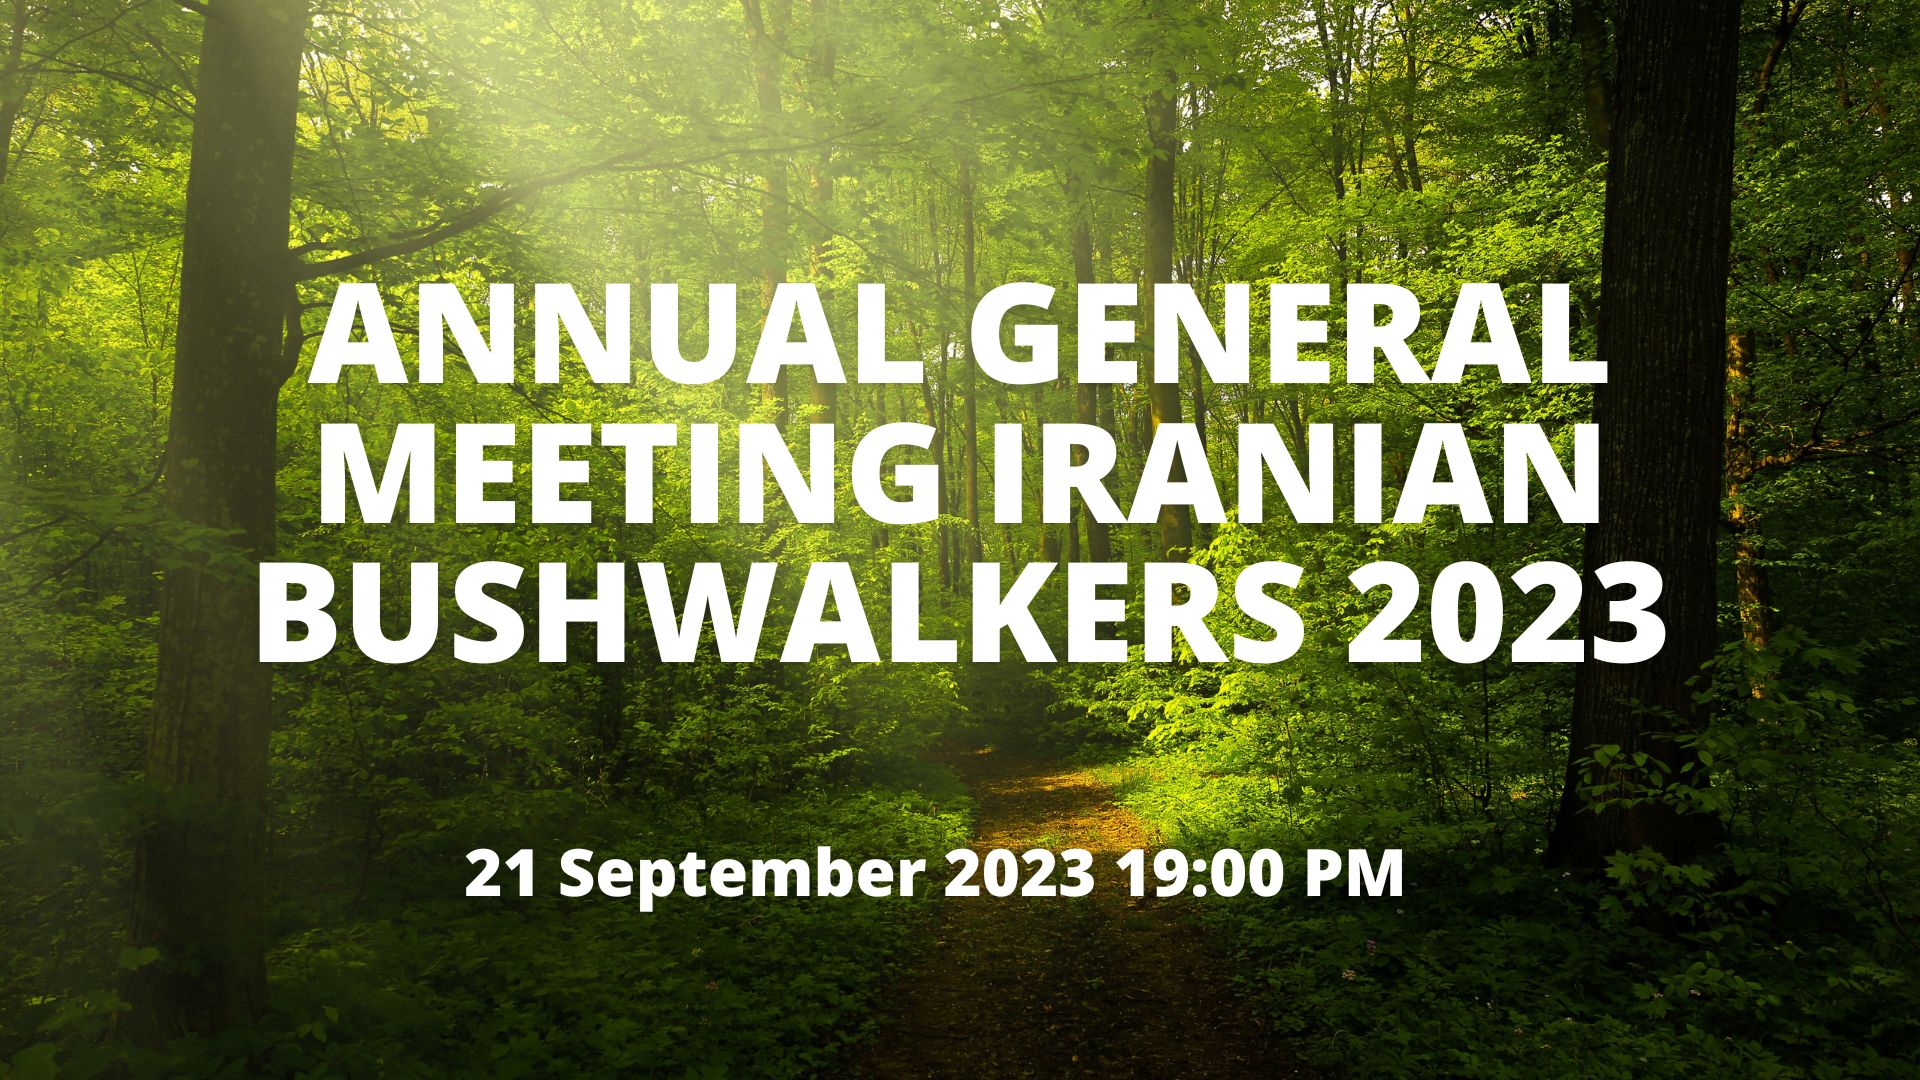 Annual General Meeting Iranian Bushwalkers 2023